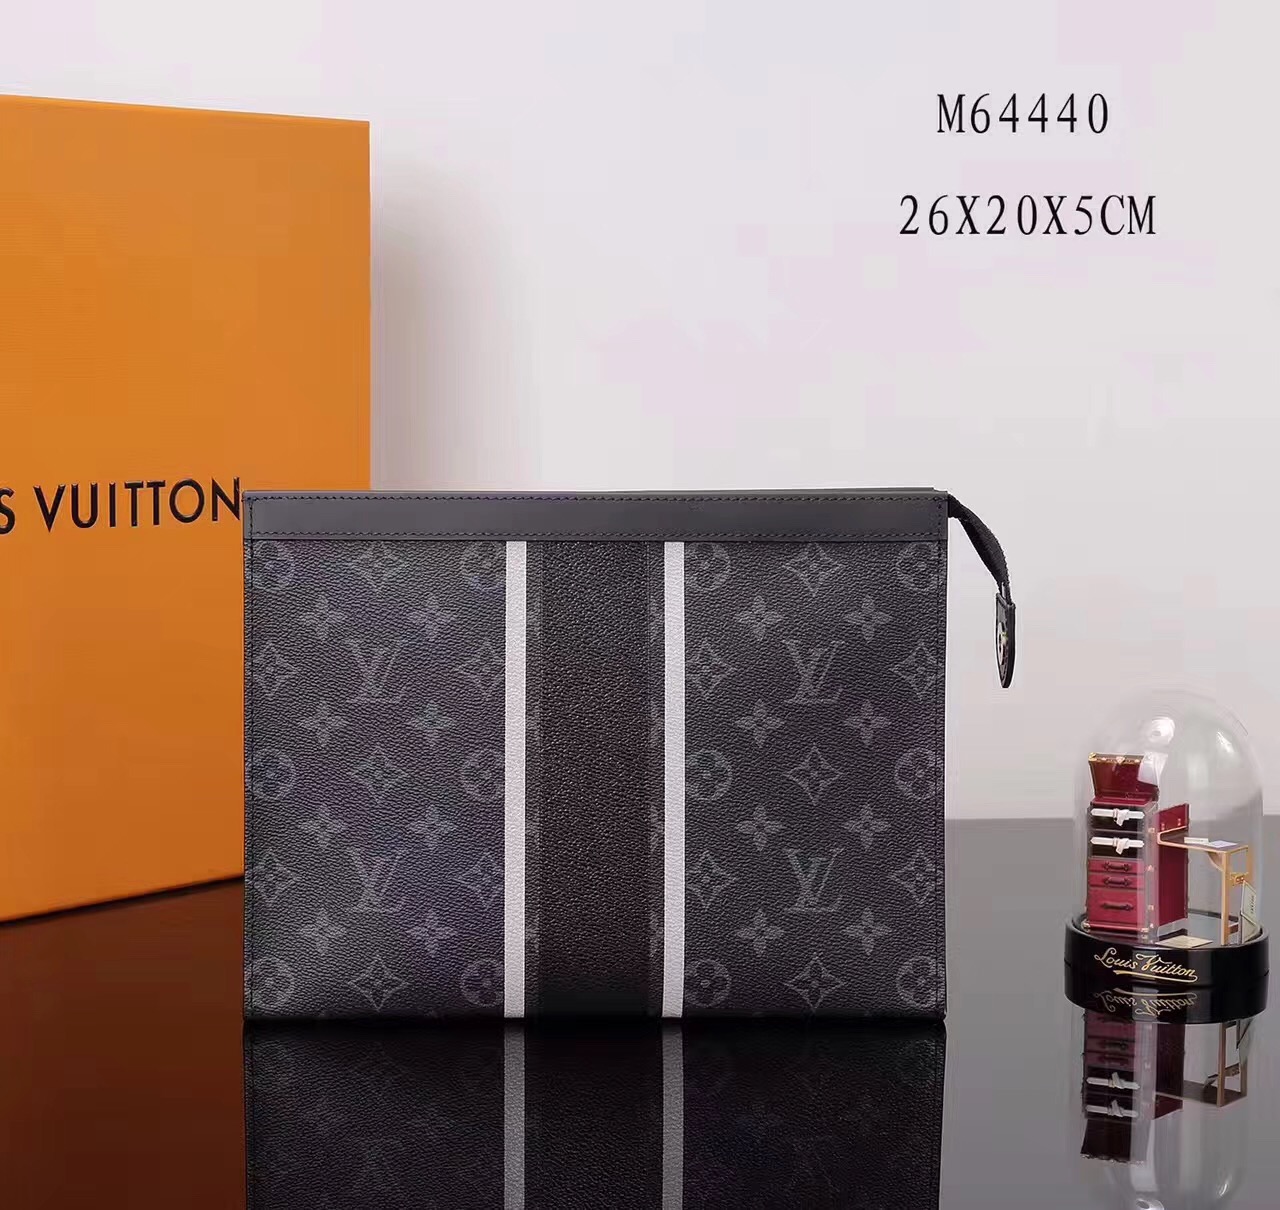 Men LV Louis Vuitton M64440 Pochette Voyage Monogram Clutch bags Handbags Black